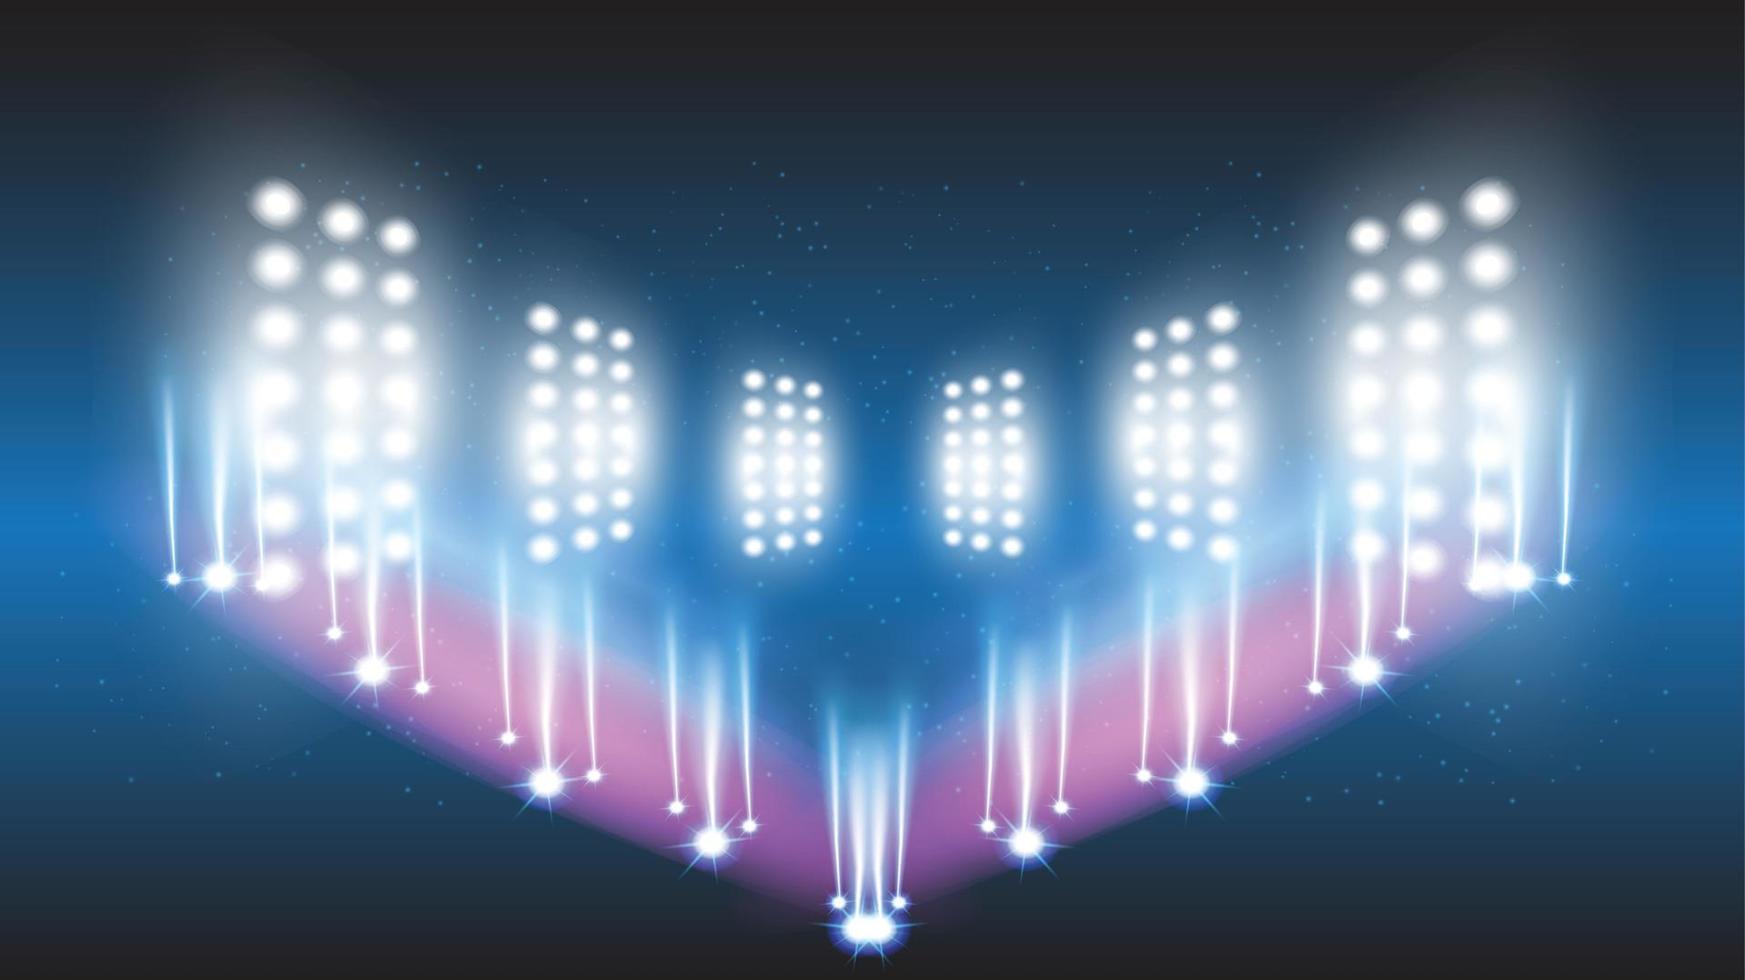 abstracte technologie achtergrond stadion podium hal met schilderachtige lichten van ronde futuristische technologie gebruikersinterface blauwe vector verlichting lege fase spotlight achtergrond.